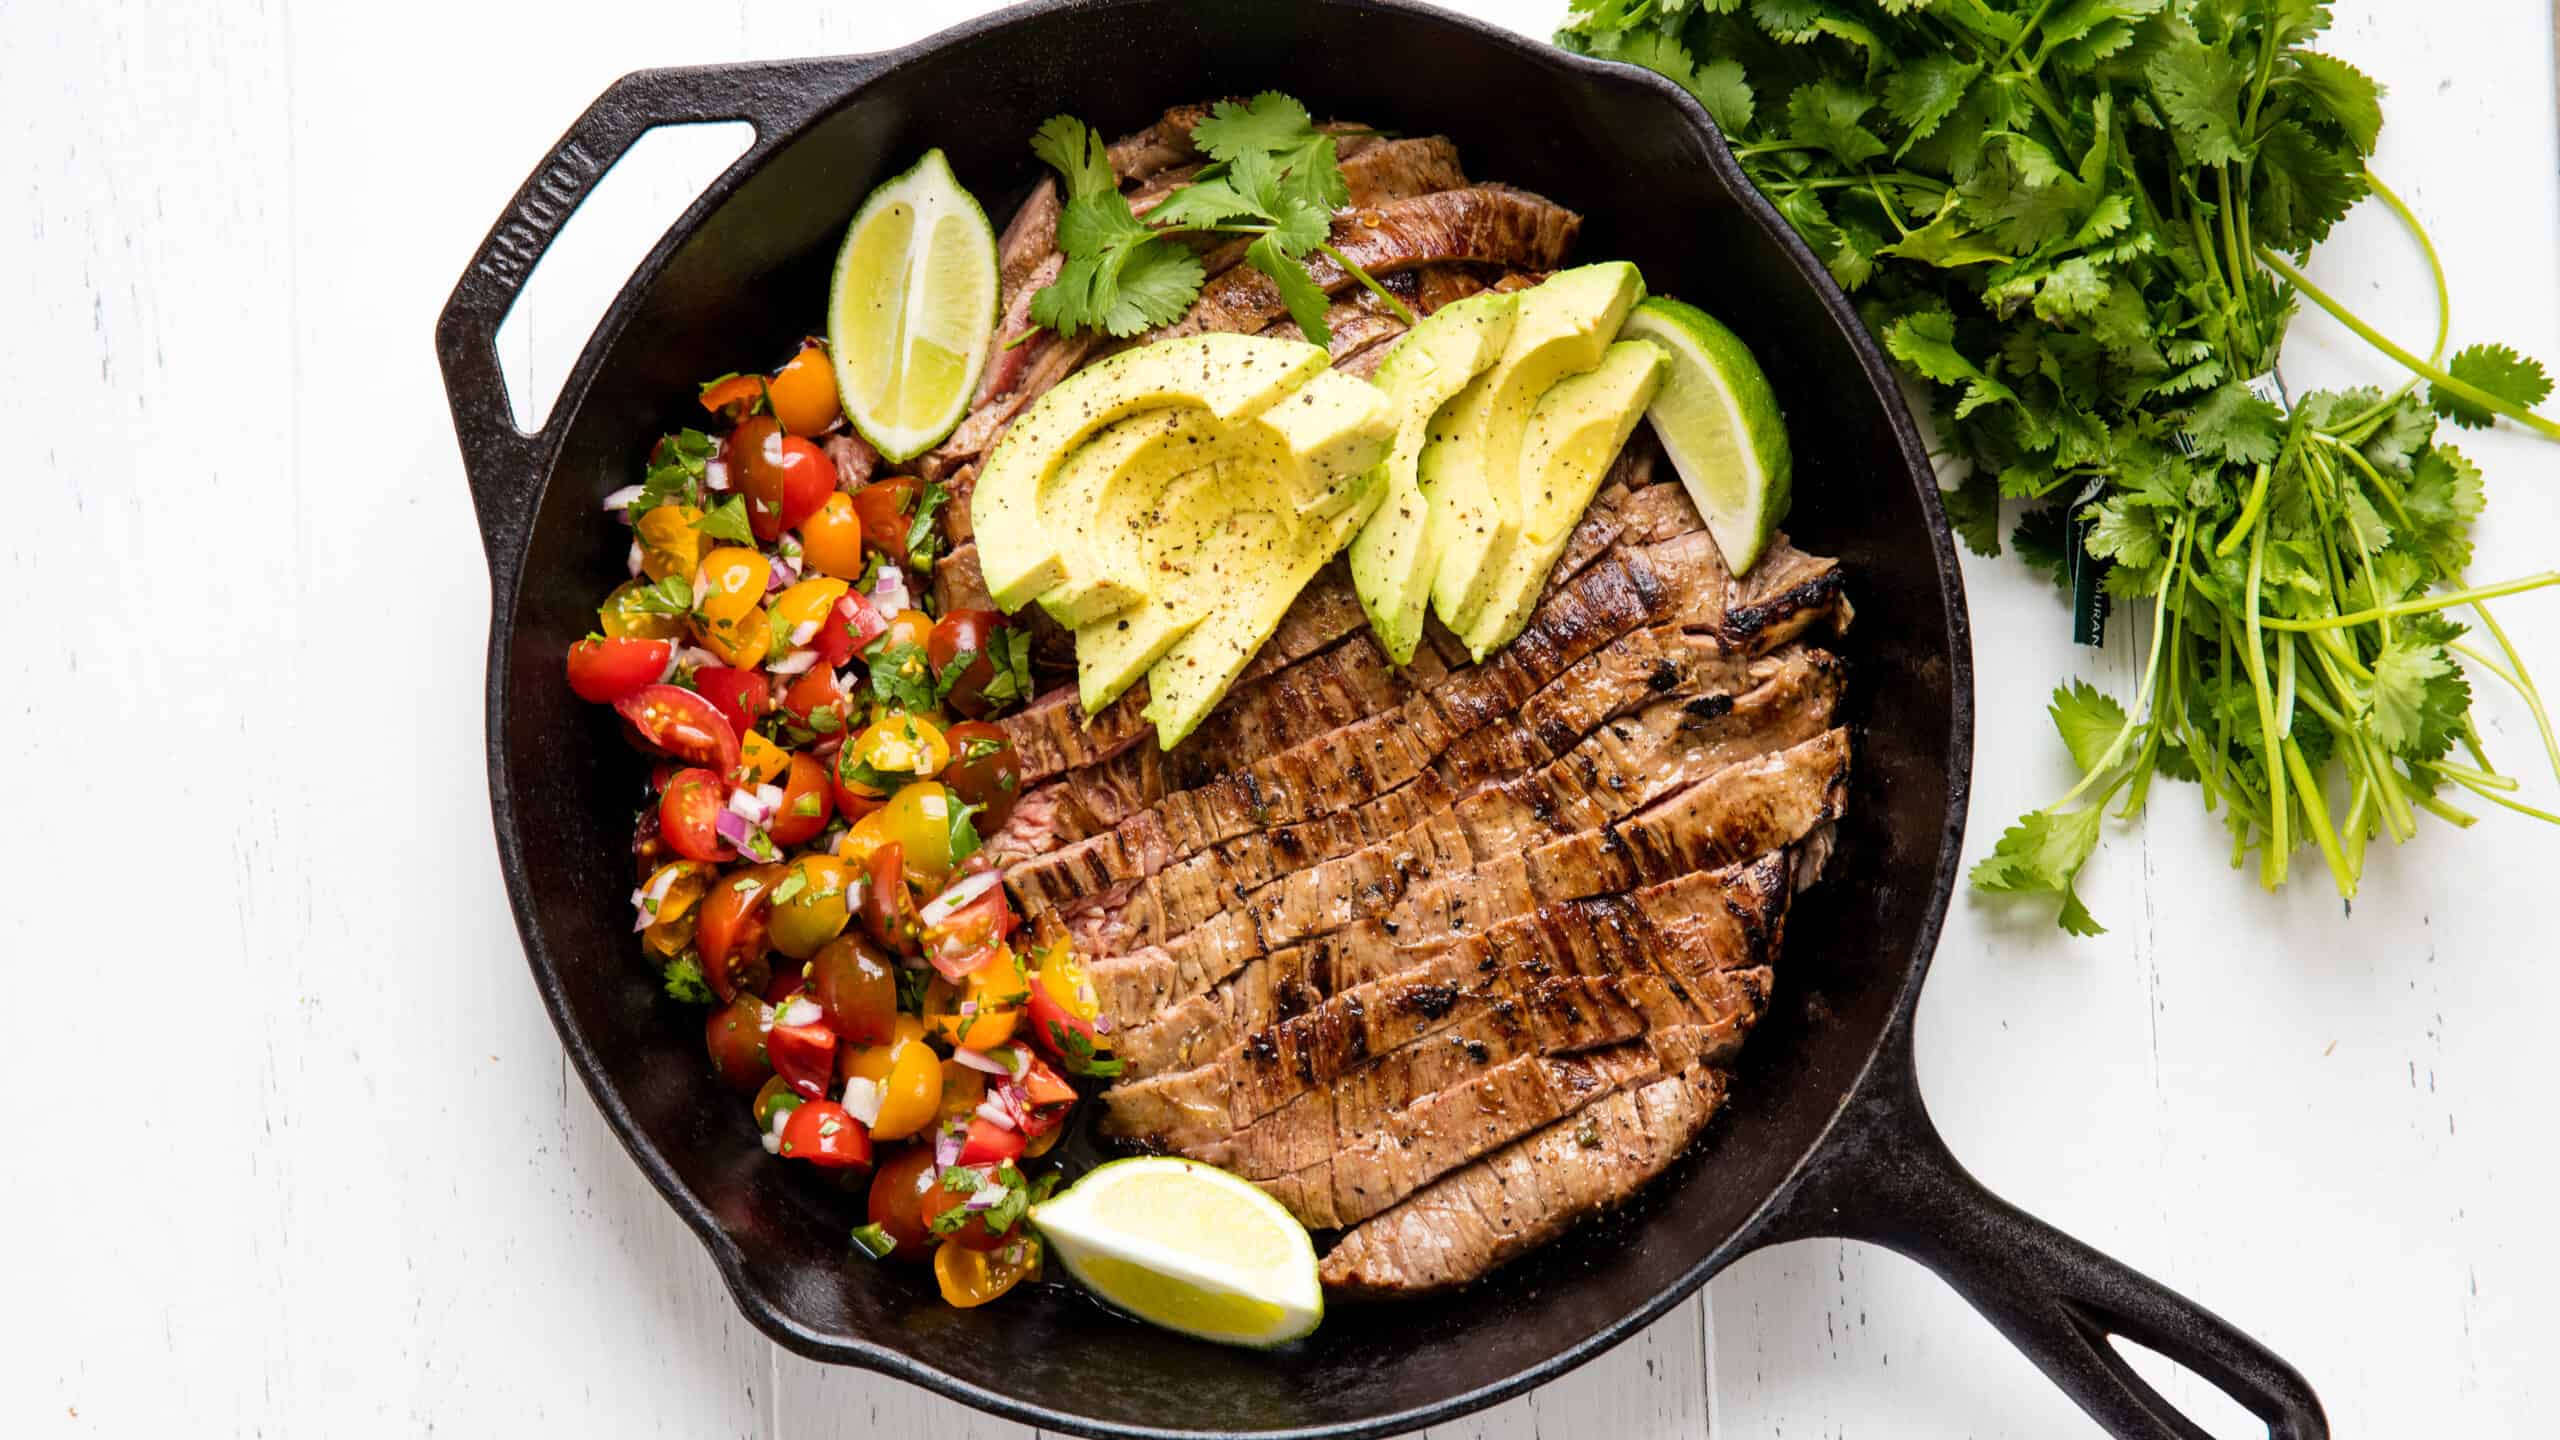 https://thestayathomechef.com/wp-content/uploads/2020/04/Mexican-Skillet-Steak-21-scaled.jpg